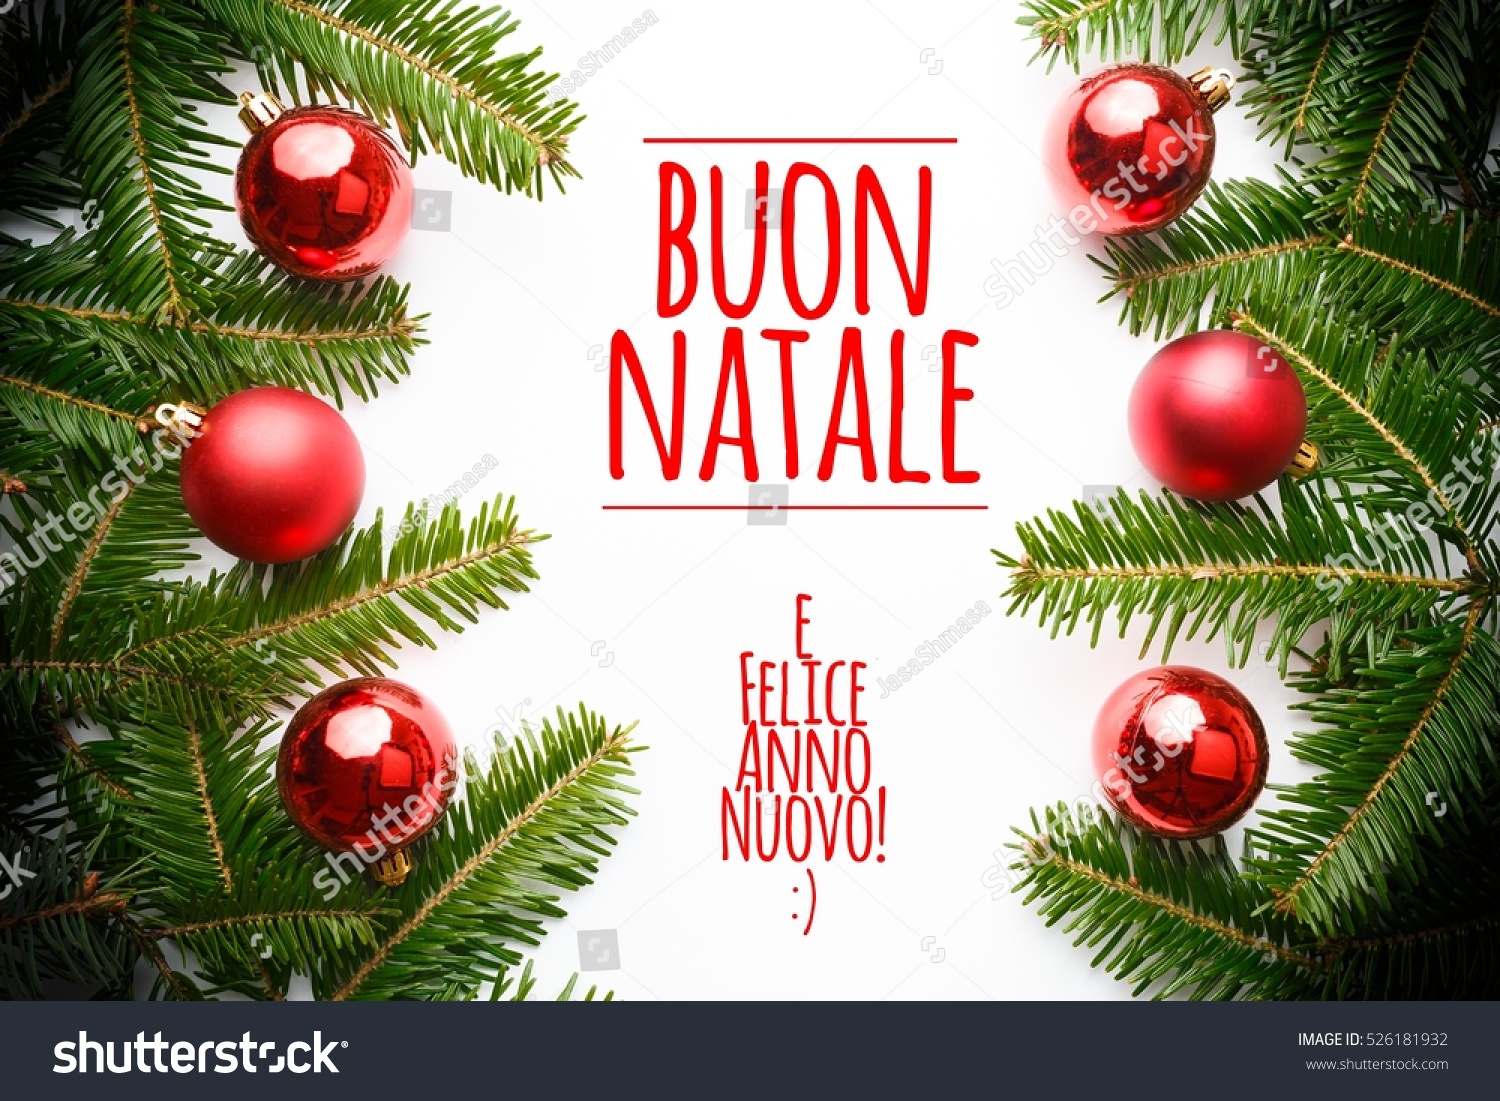 E Buon Natale.Christmas Decorations Greeting Italian Buon Natale Stock Photo Edit Now 526181932